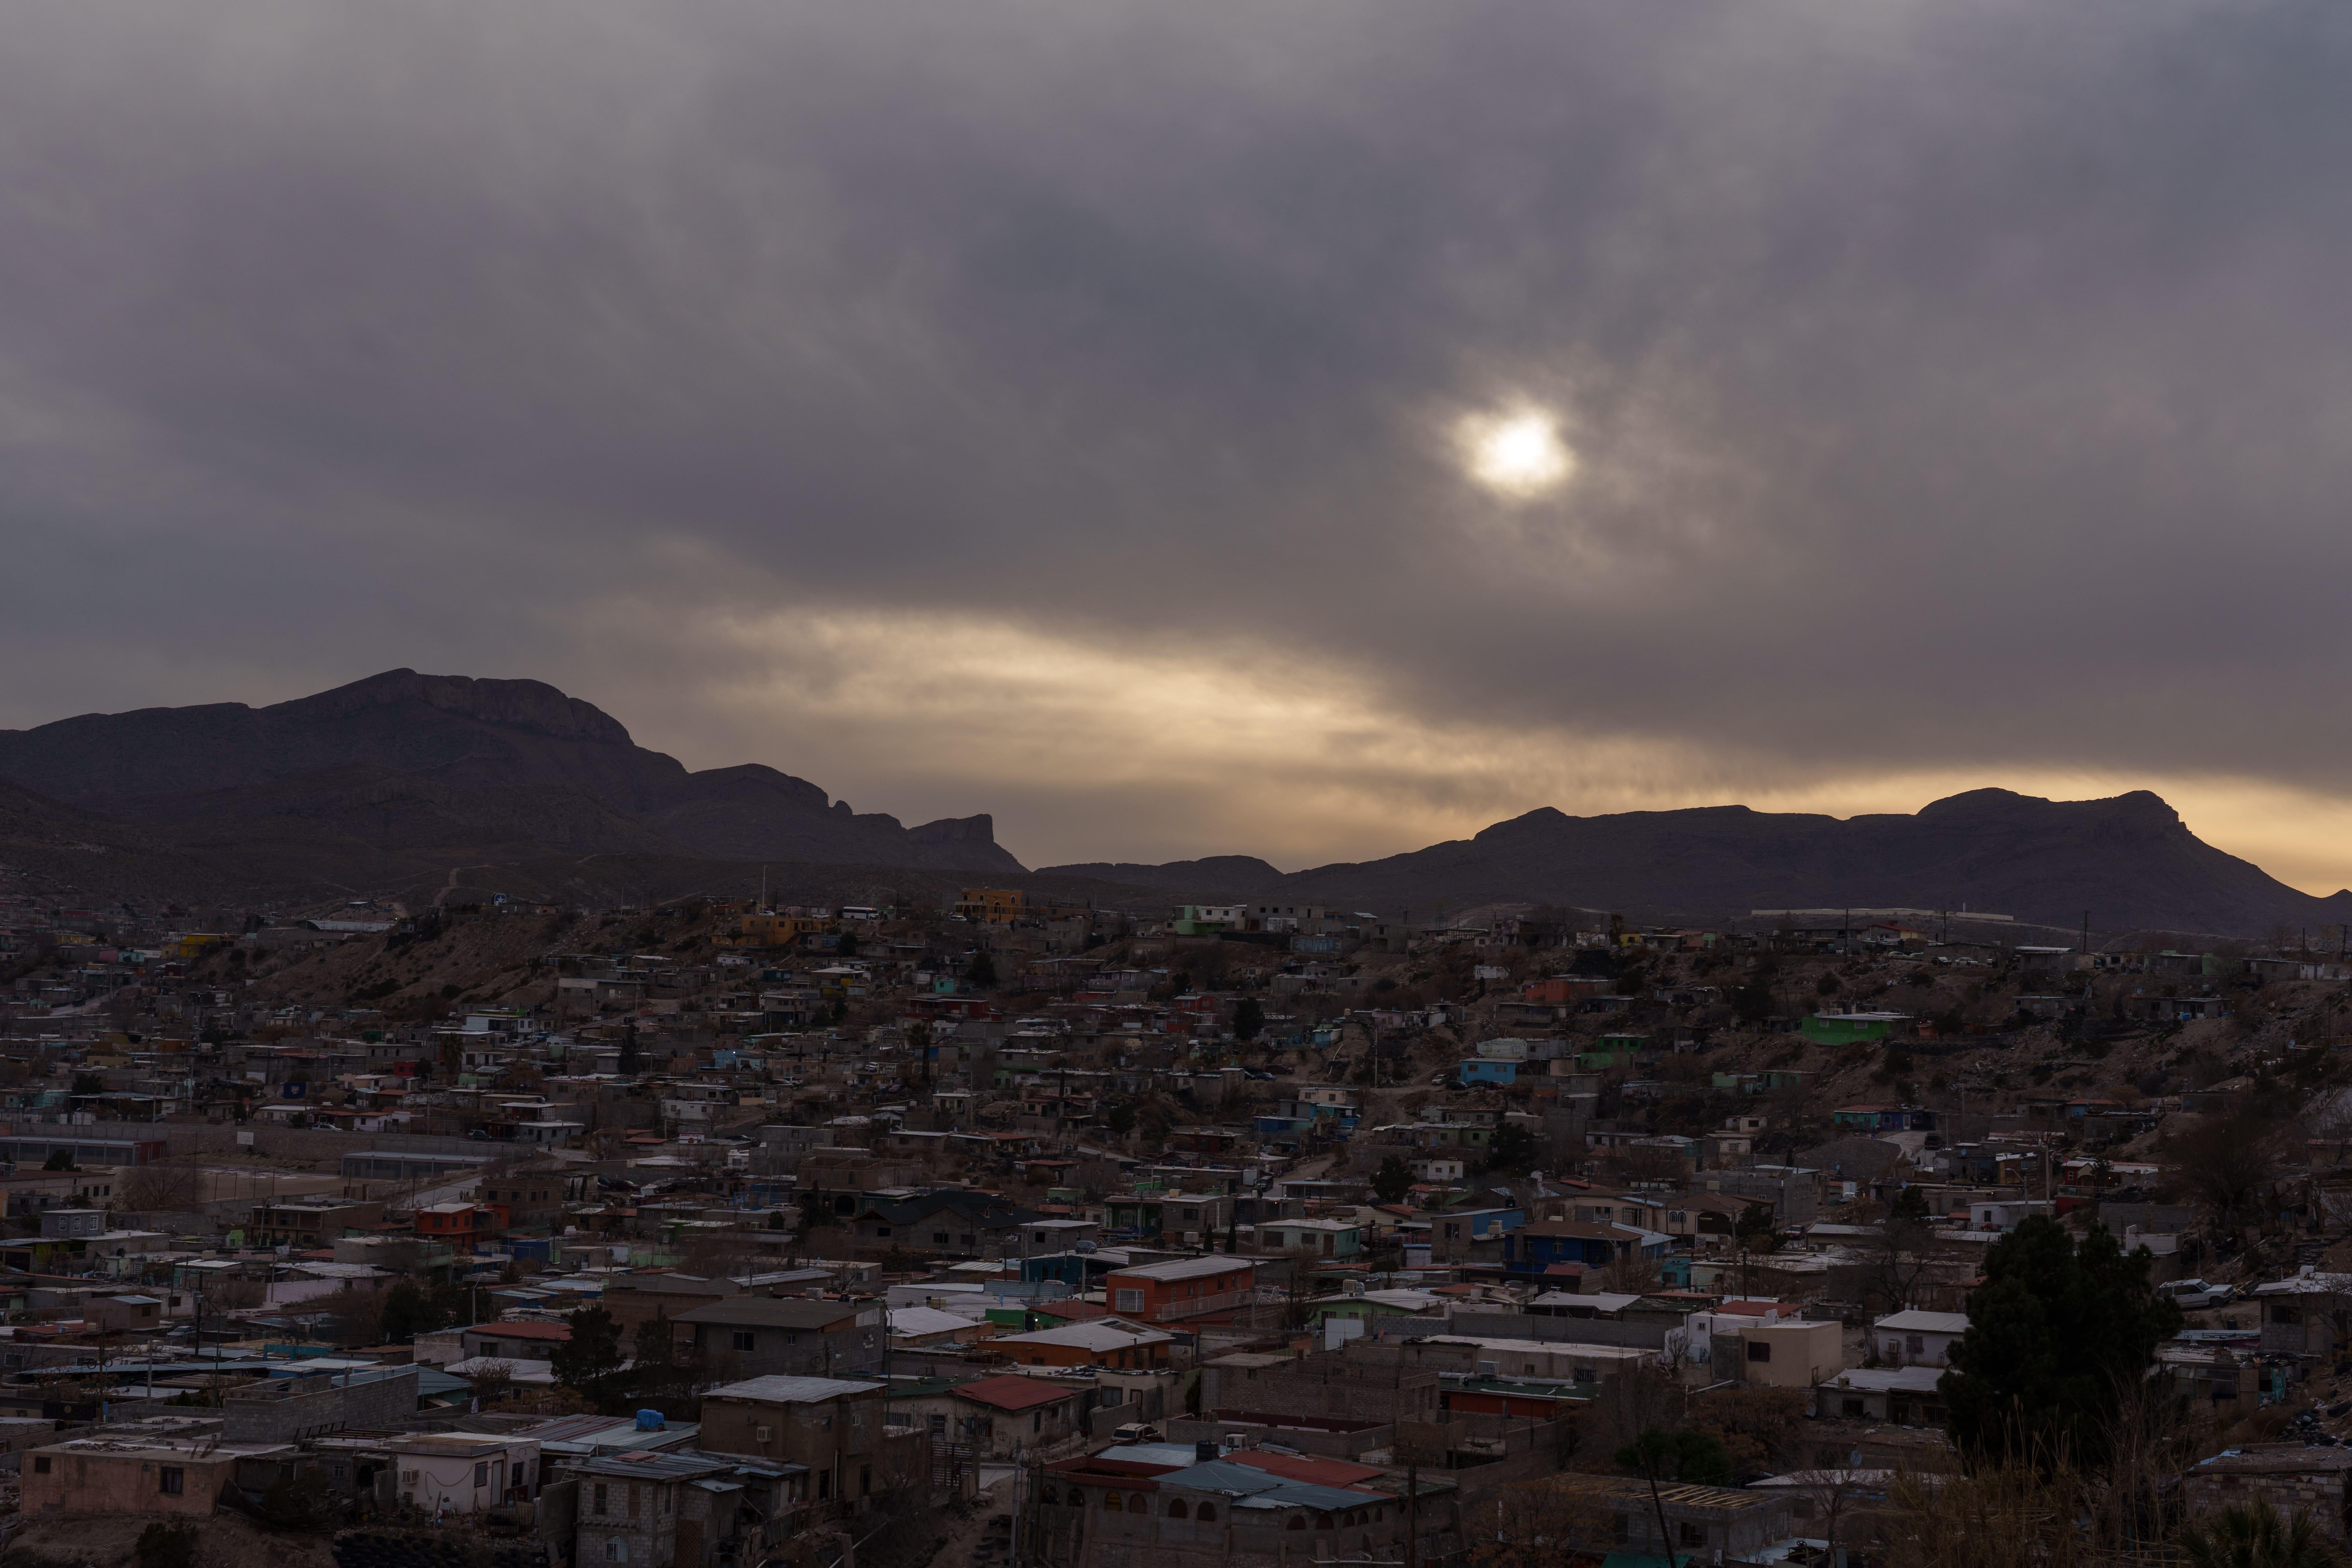  Juárez, Mexico. A view of the colonias of Ciudad Juárez.